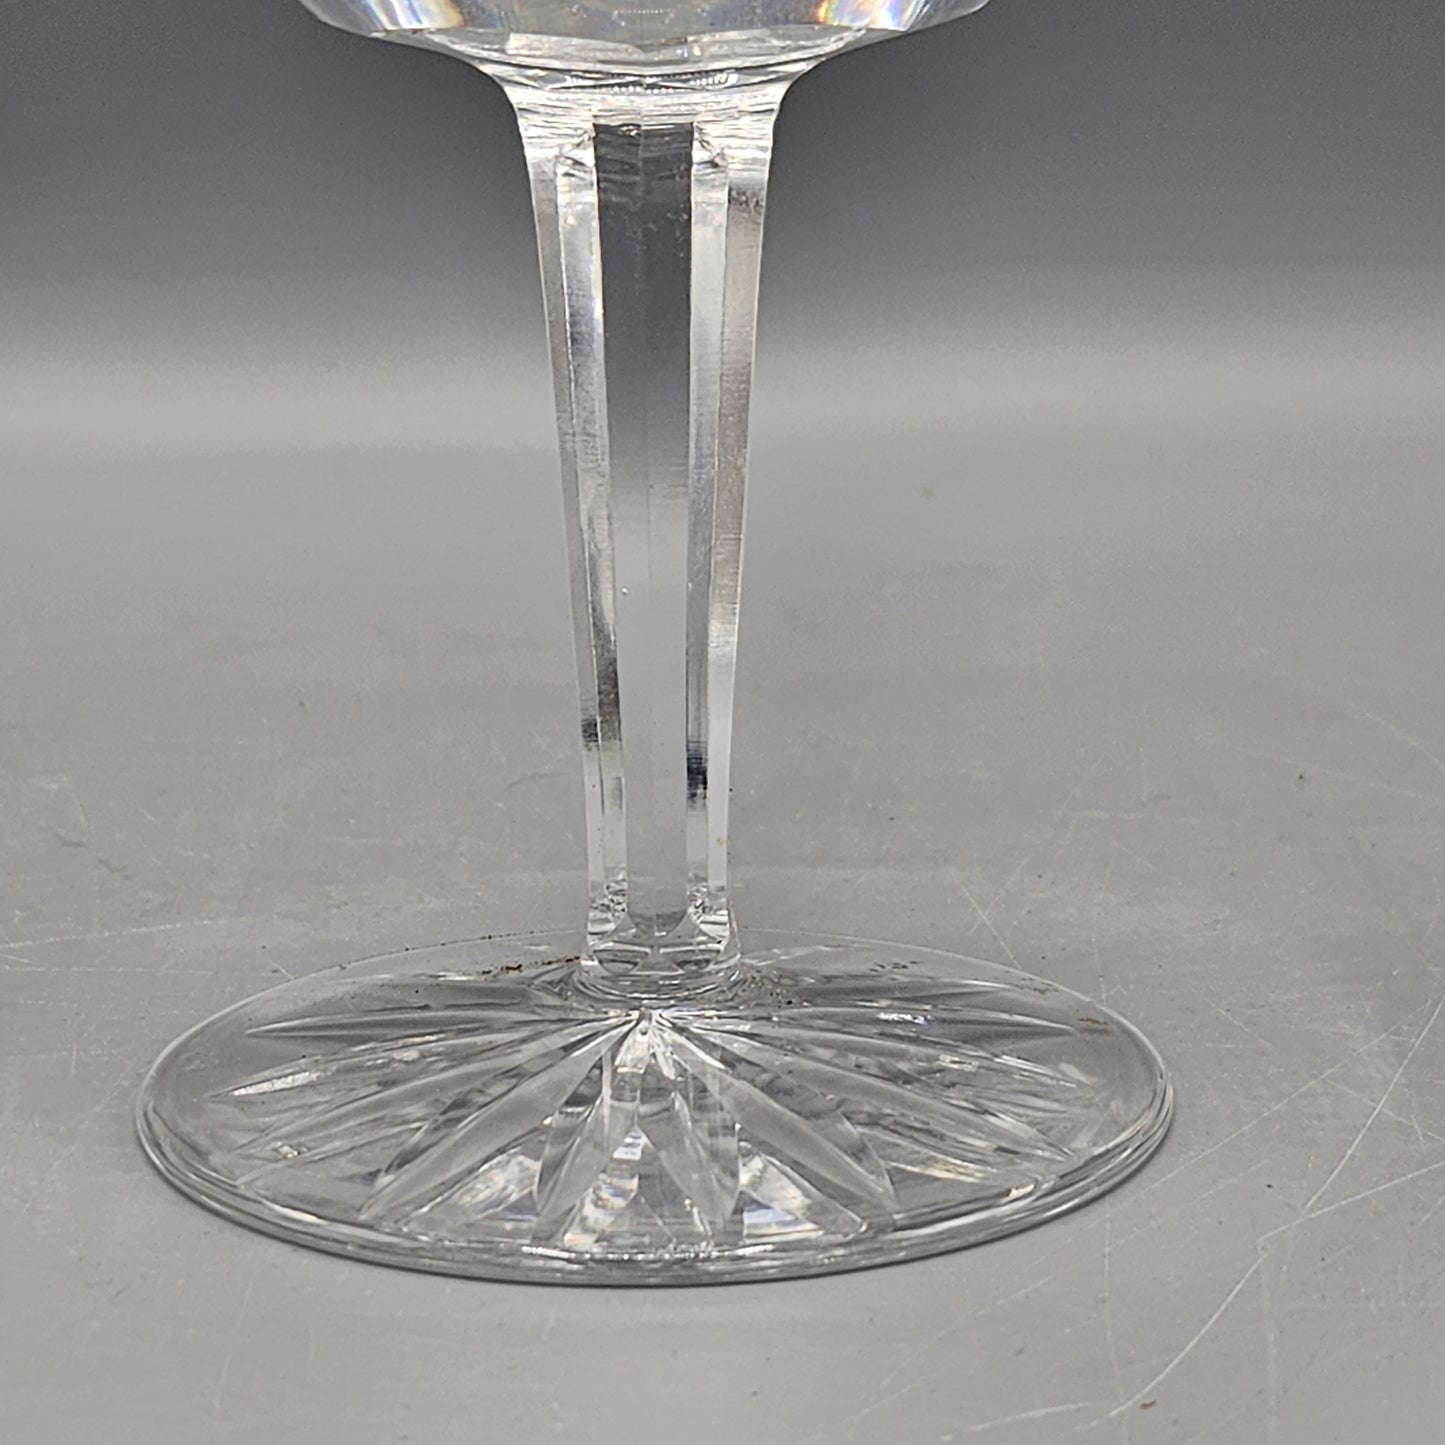 Waterford Crystal Lismore Water Goblet